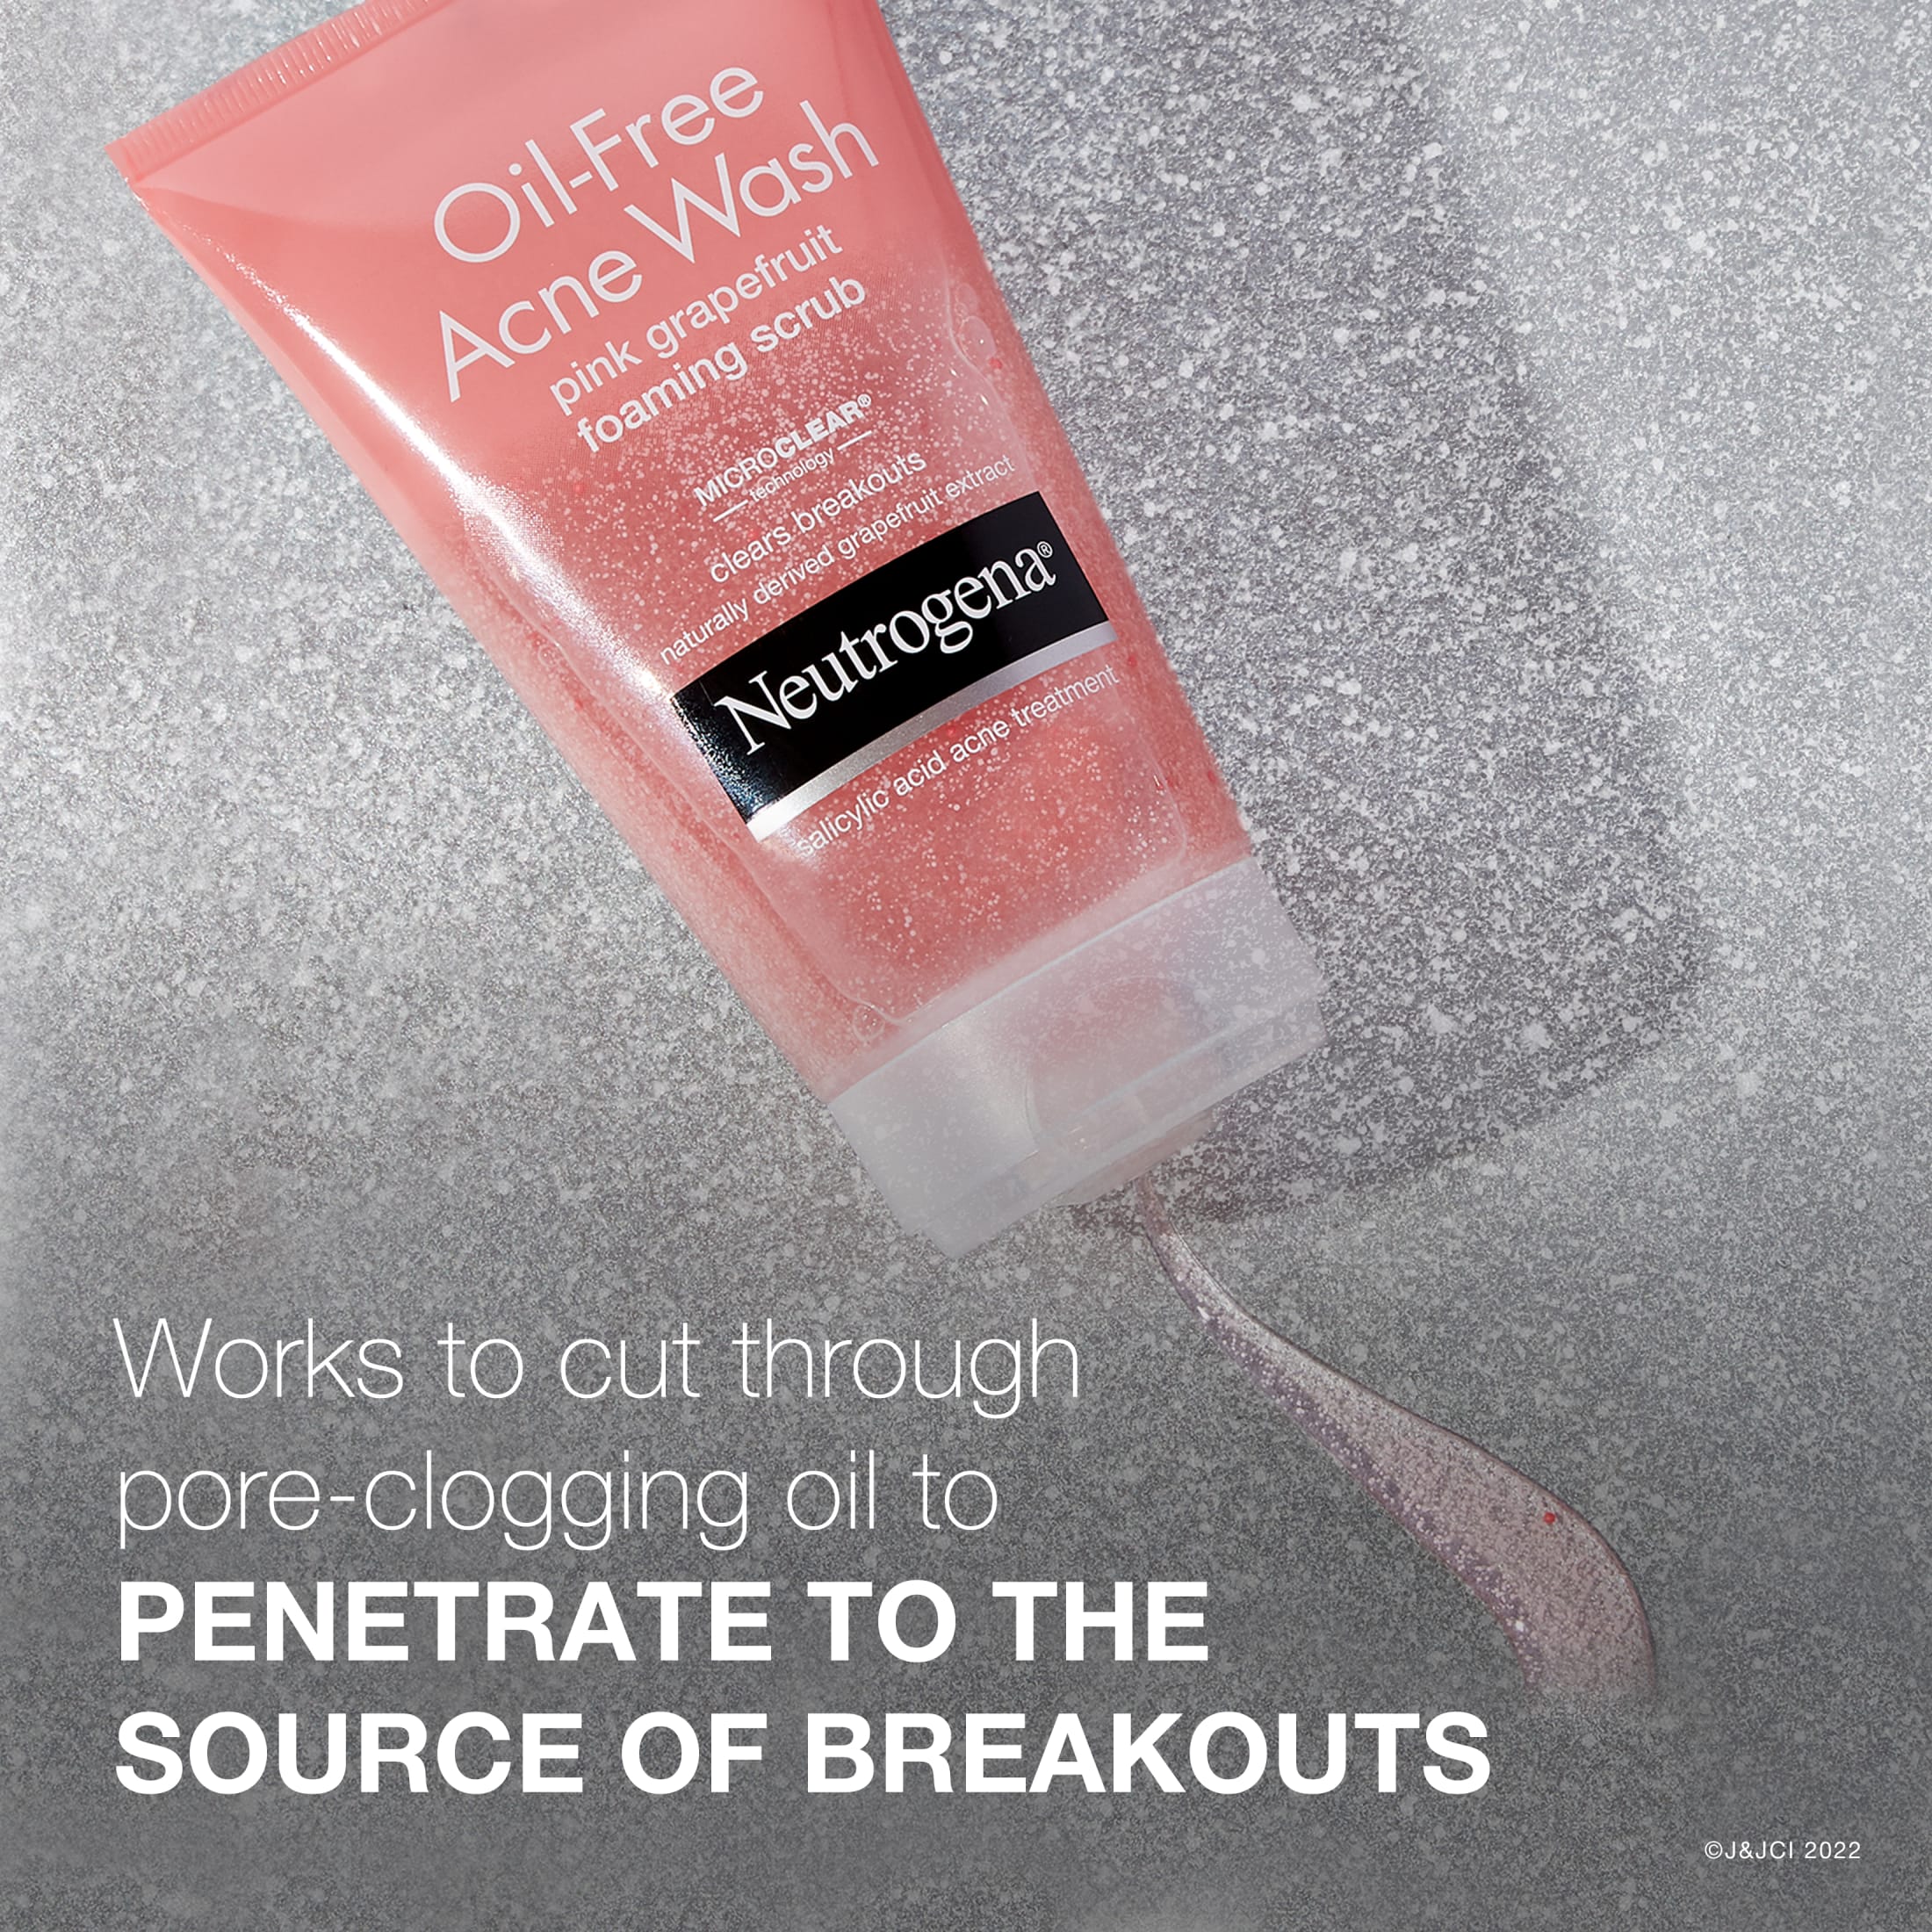 Neutrogena Oil-Free Acne Wash Pink Grapefruit Facial Scrub, 4.2 fl. oz - image 5 of 11